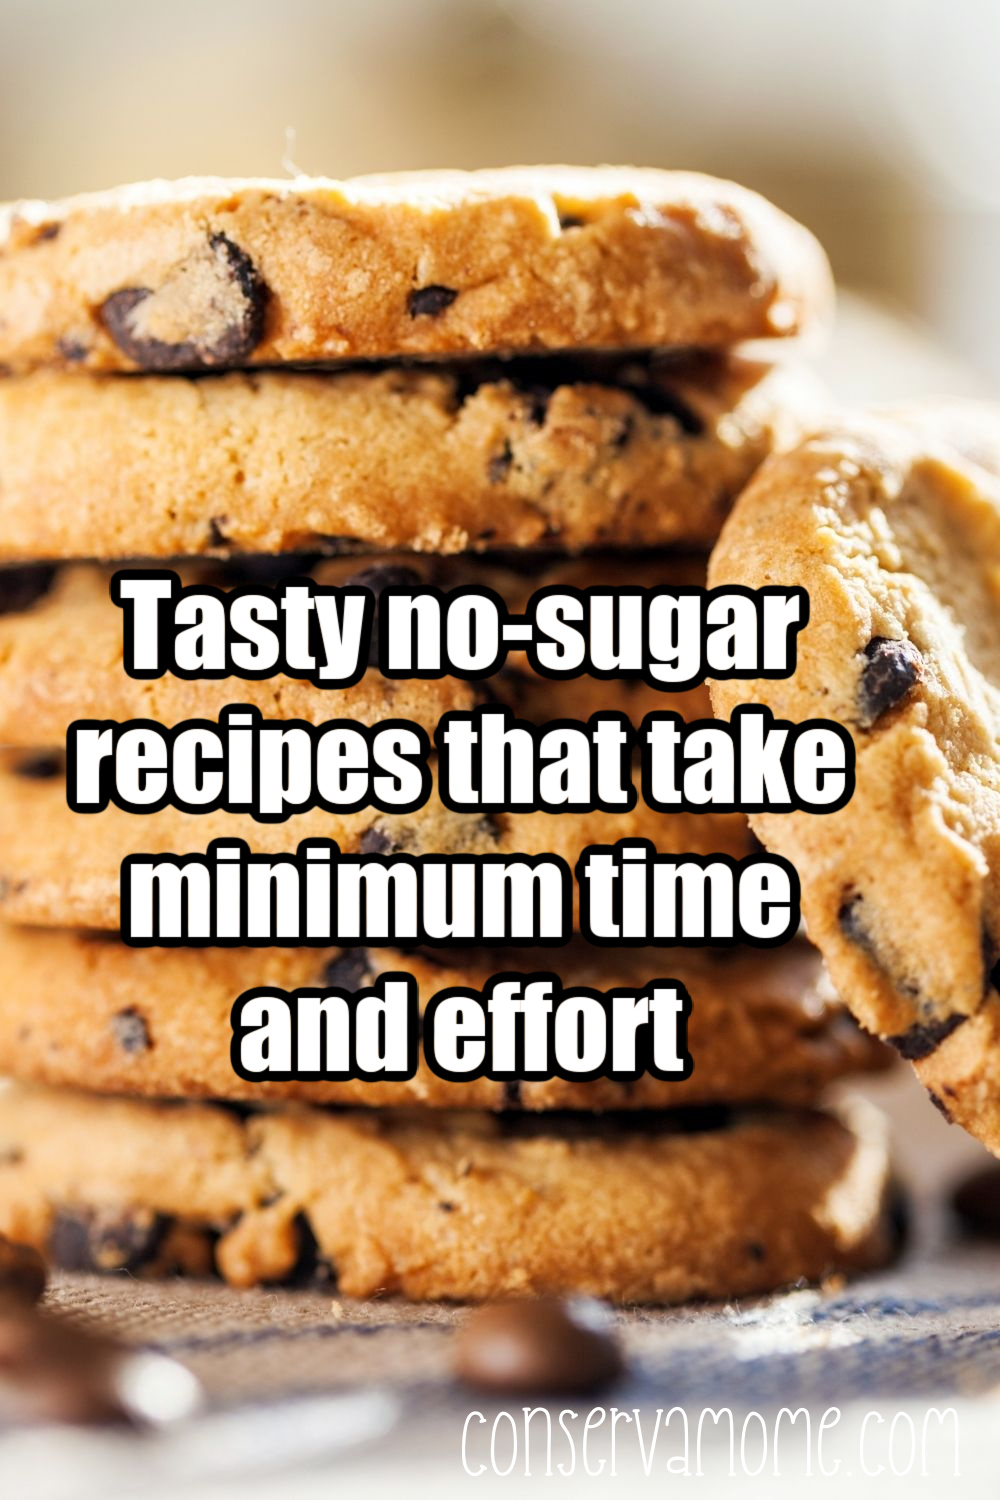 Tasty no-sugar recipes that take minimum time and effort